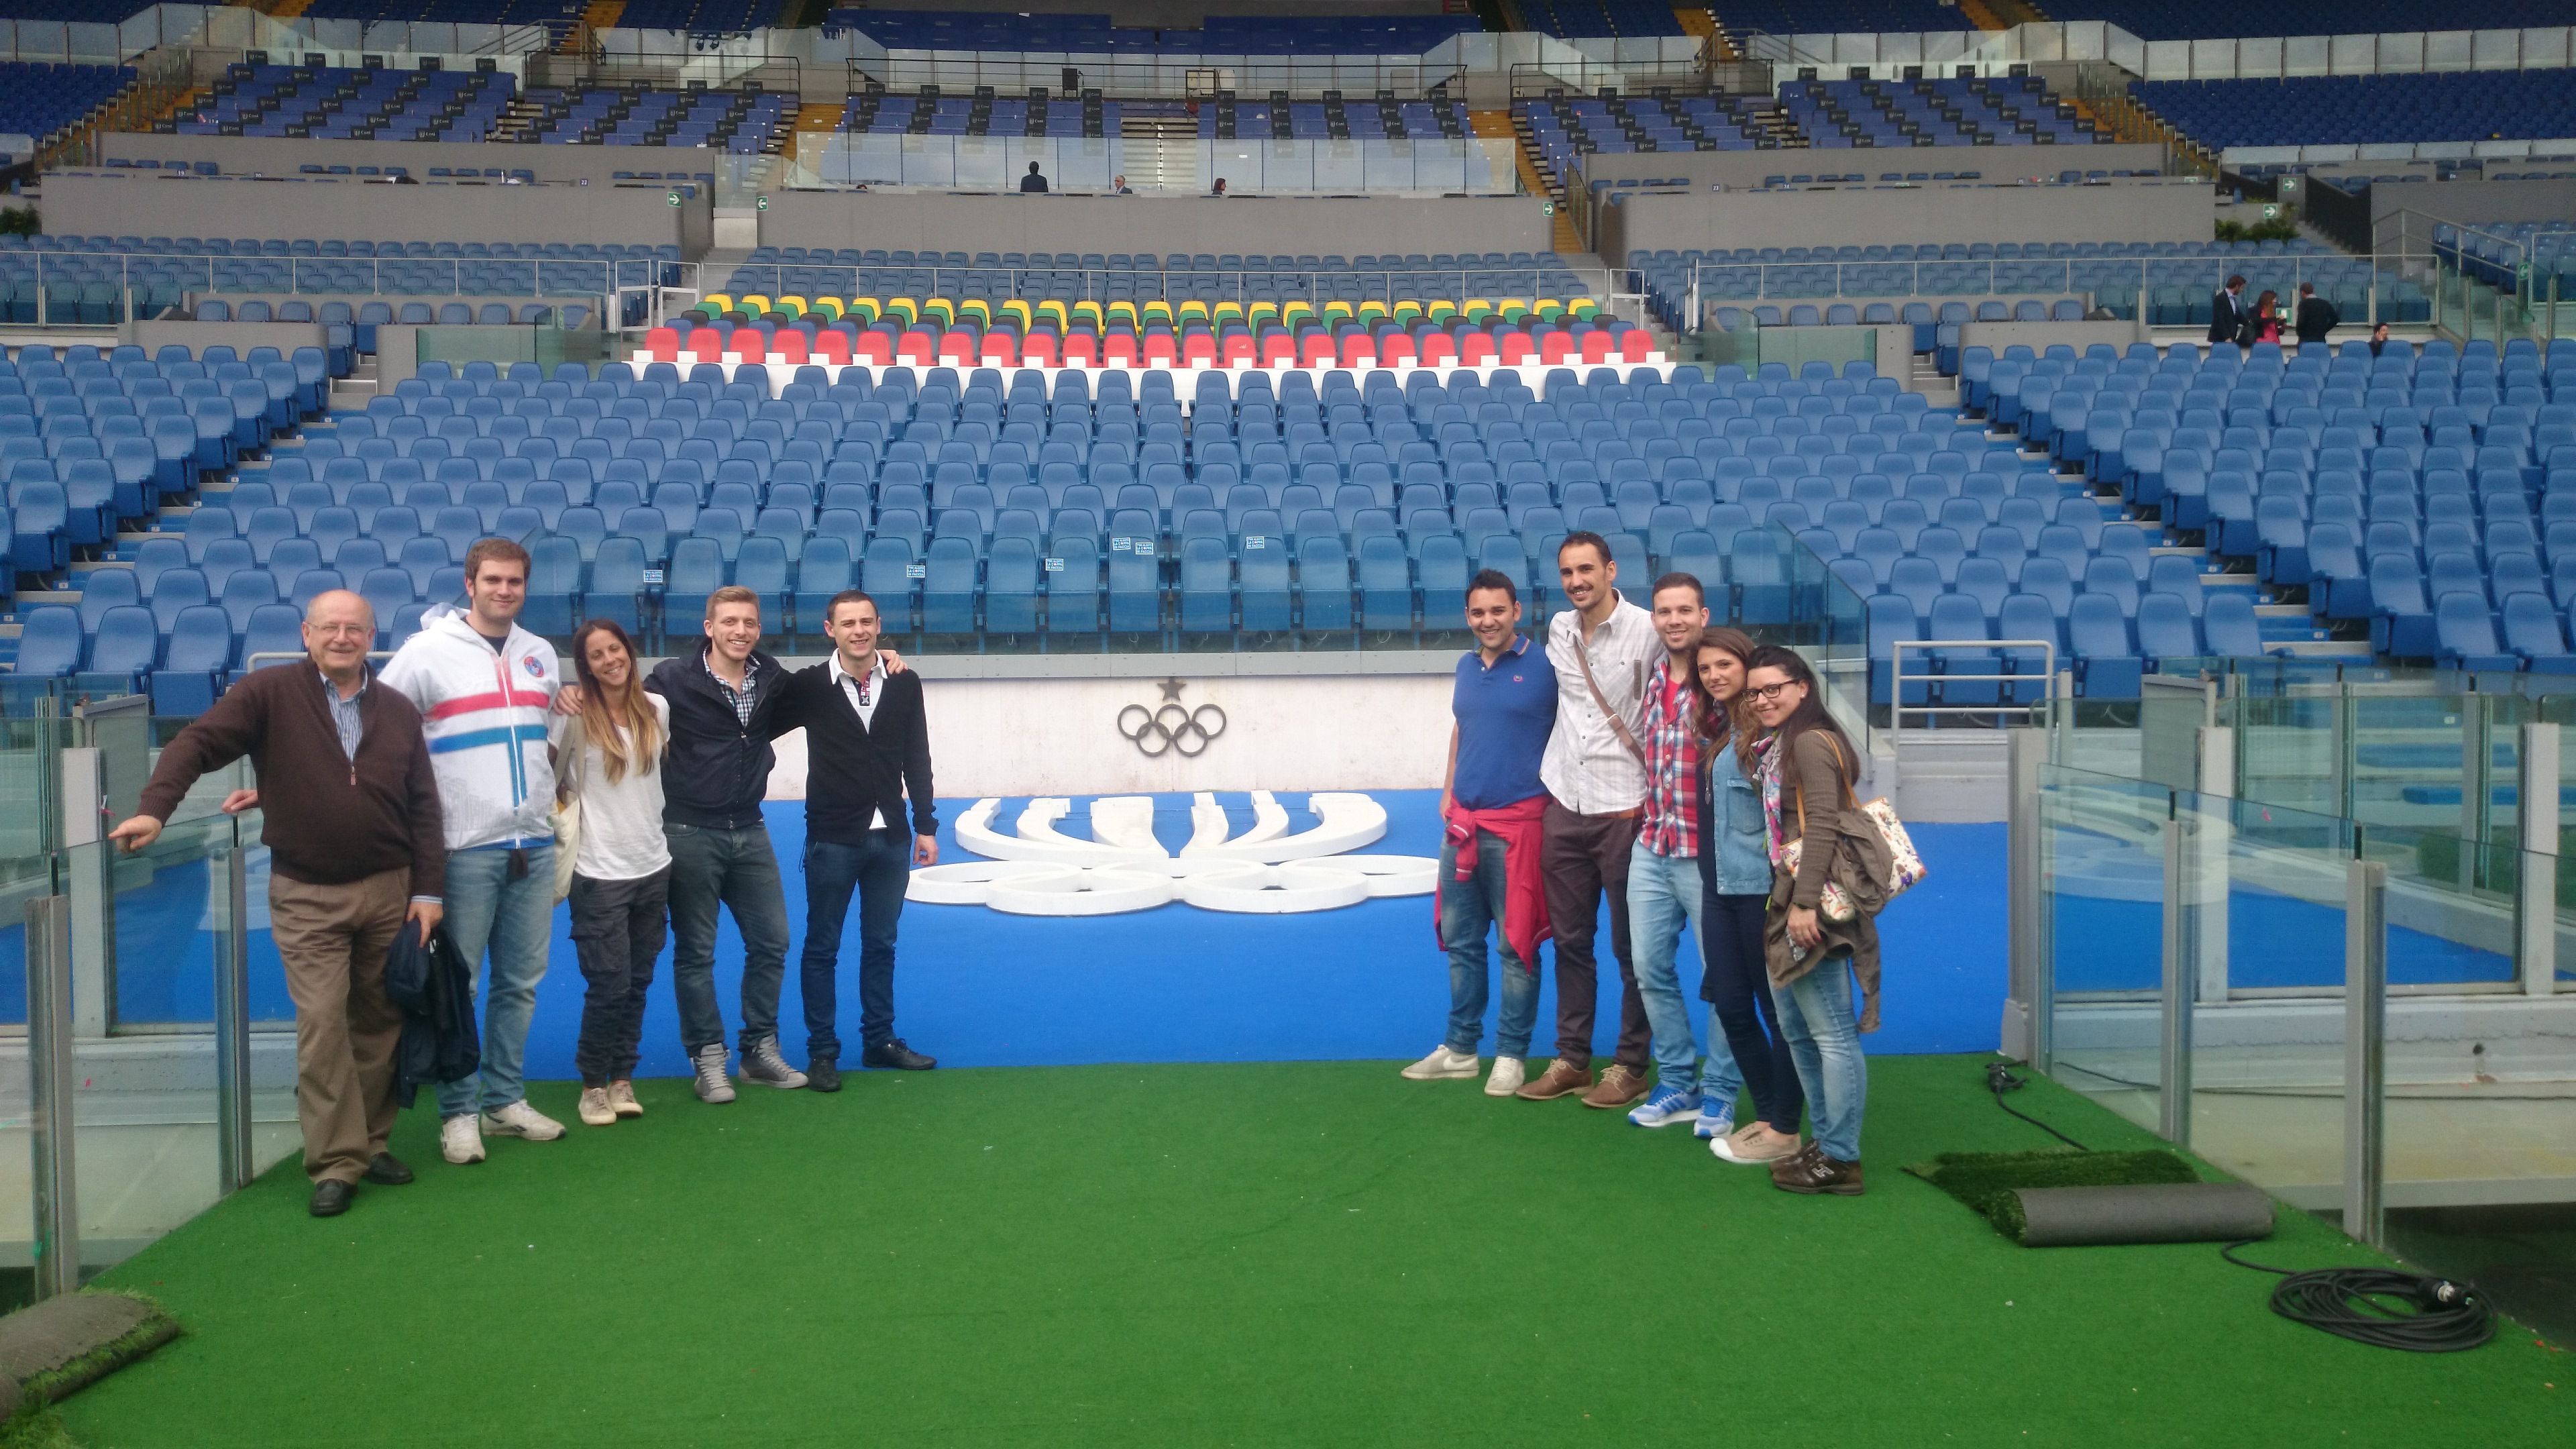 Studenti 2014 allo Stadio Olimpico